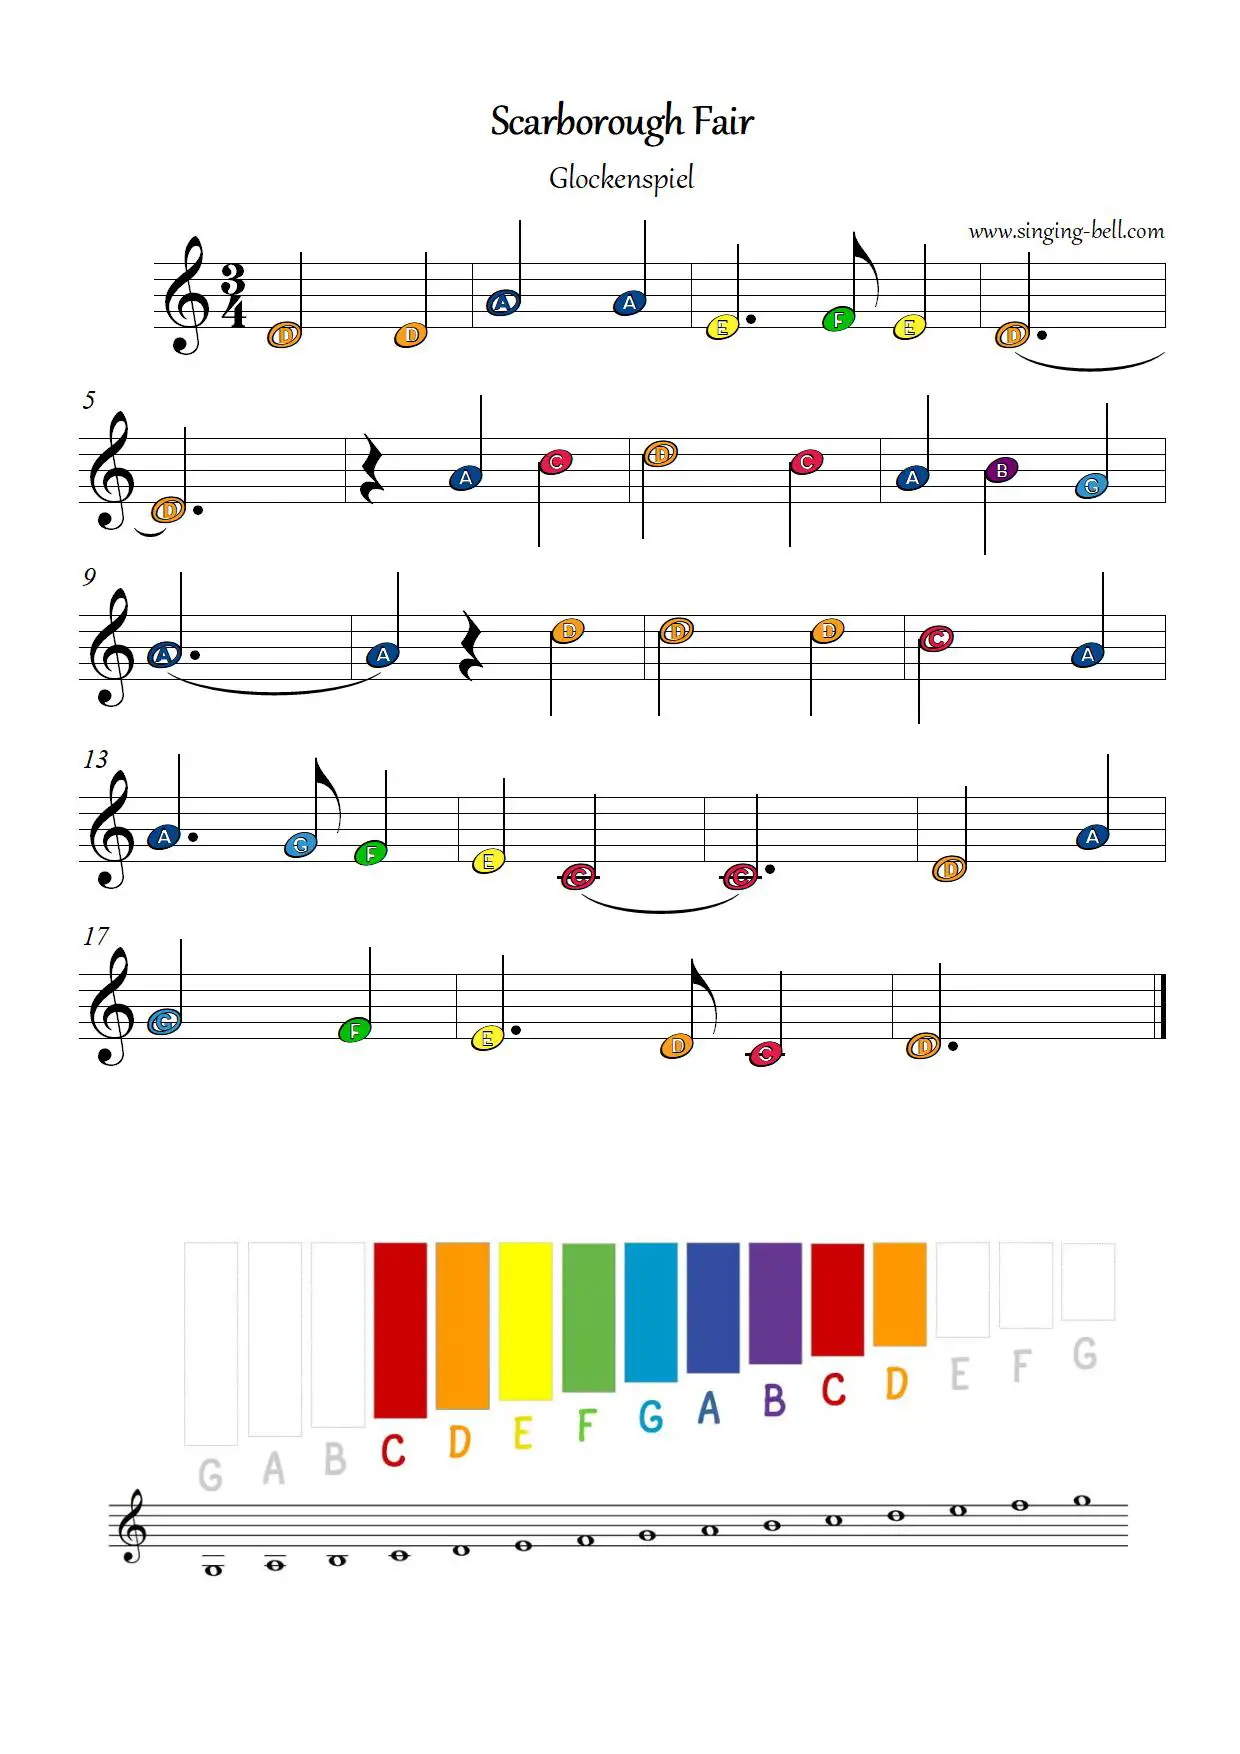 Scarborough Fair free xylophone glockenspiel sheet music color notes chart pdf